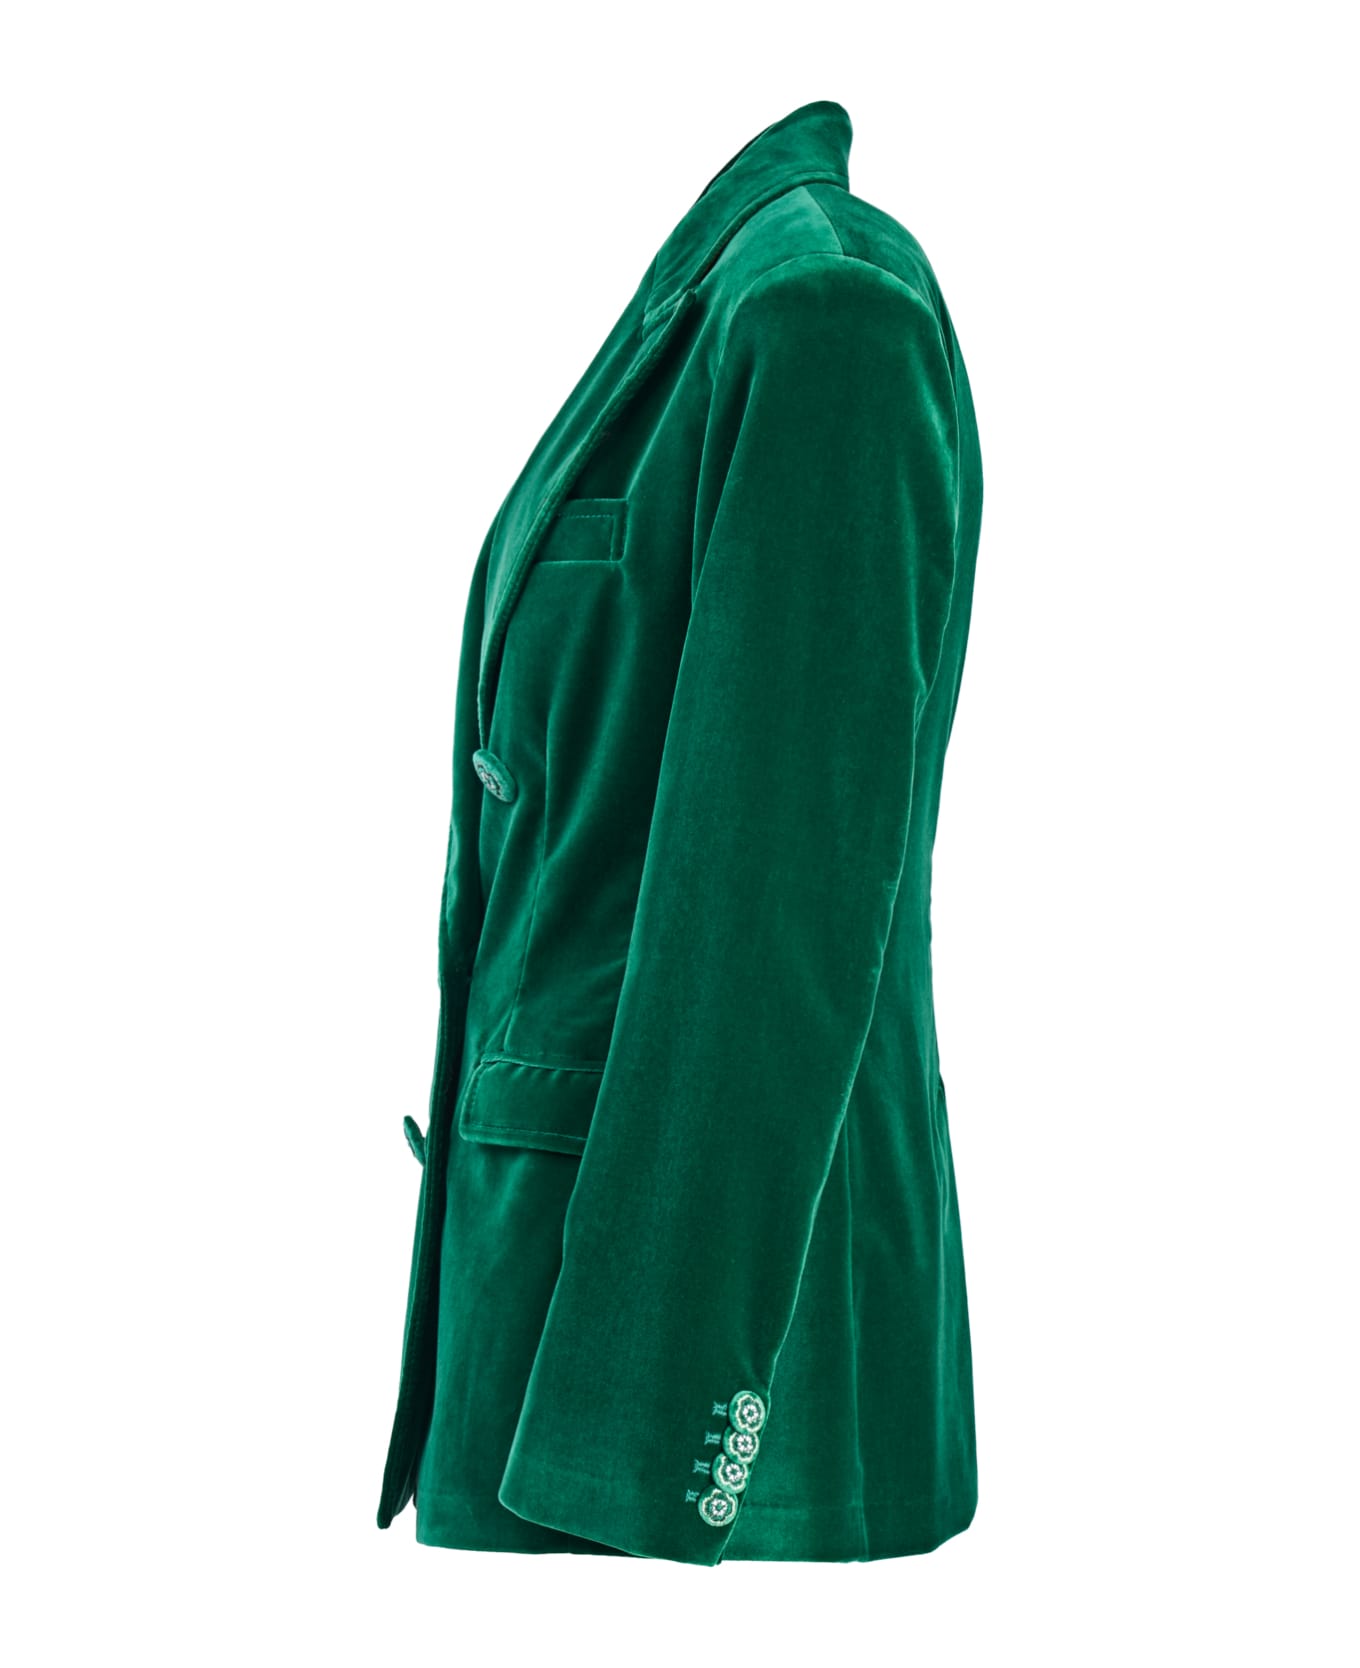 Etro Jackets Green - Green ブレザー